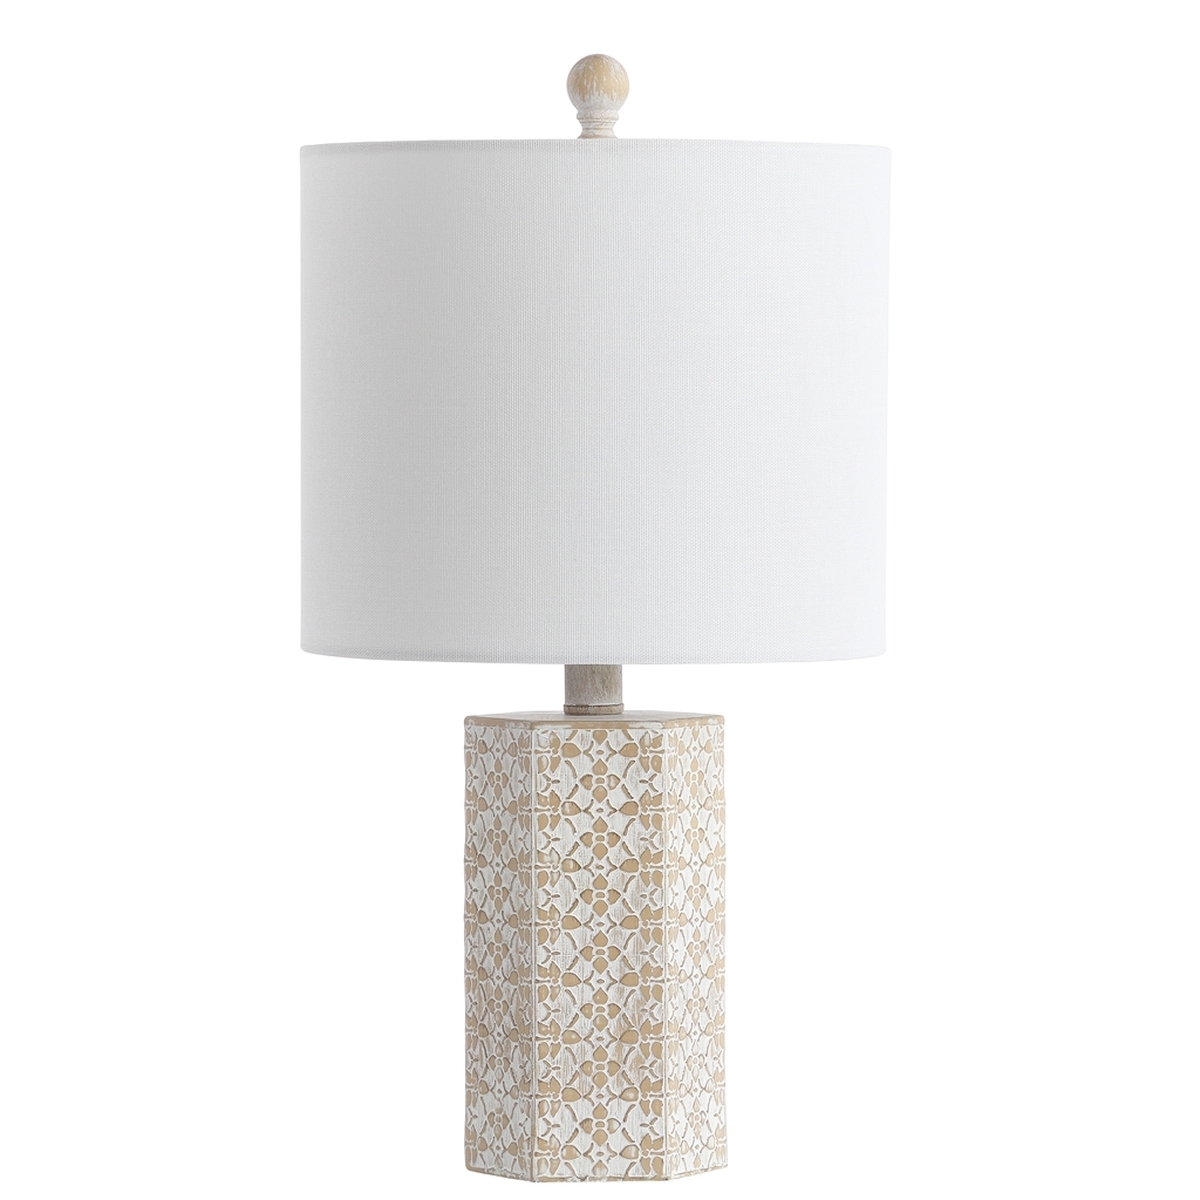 Makayla Table Lamp, Beige - Image 0